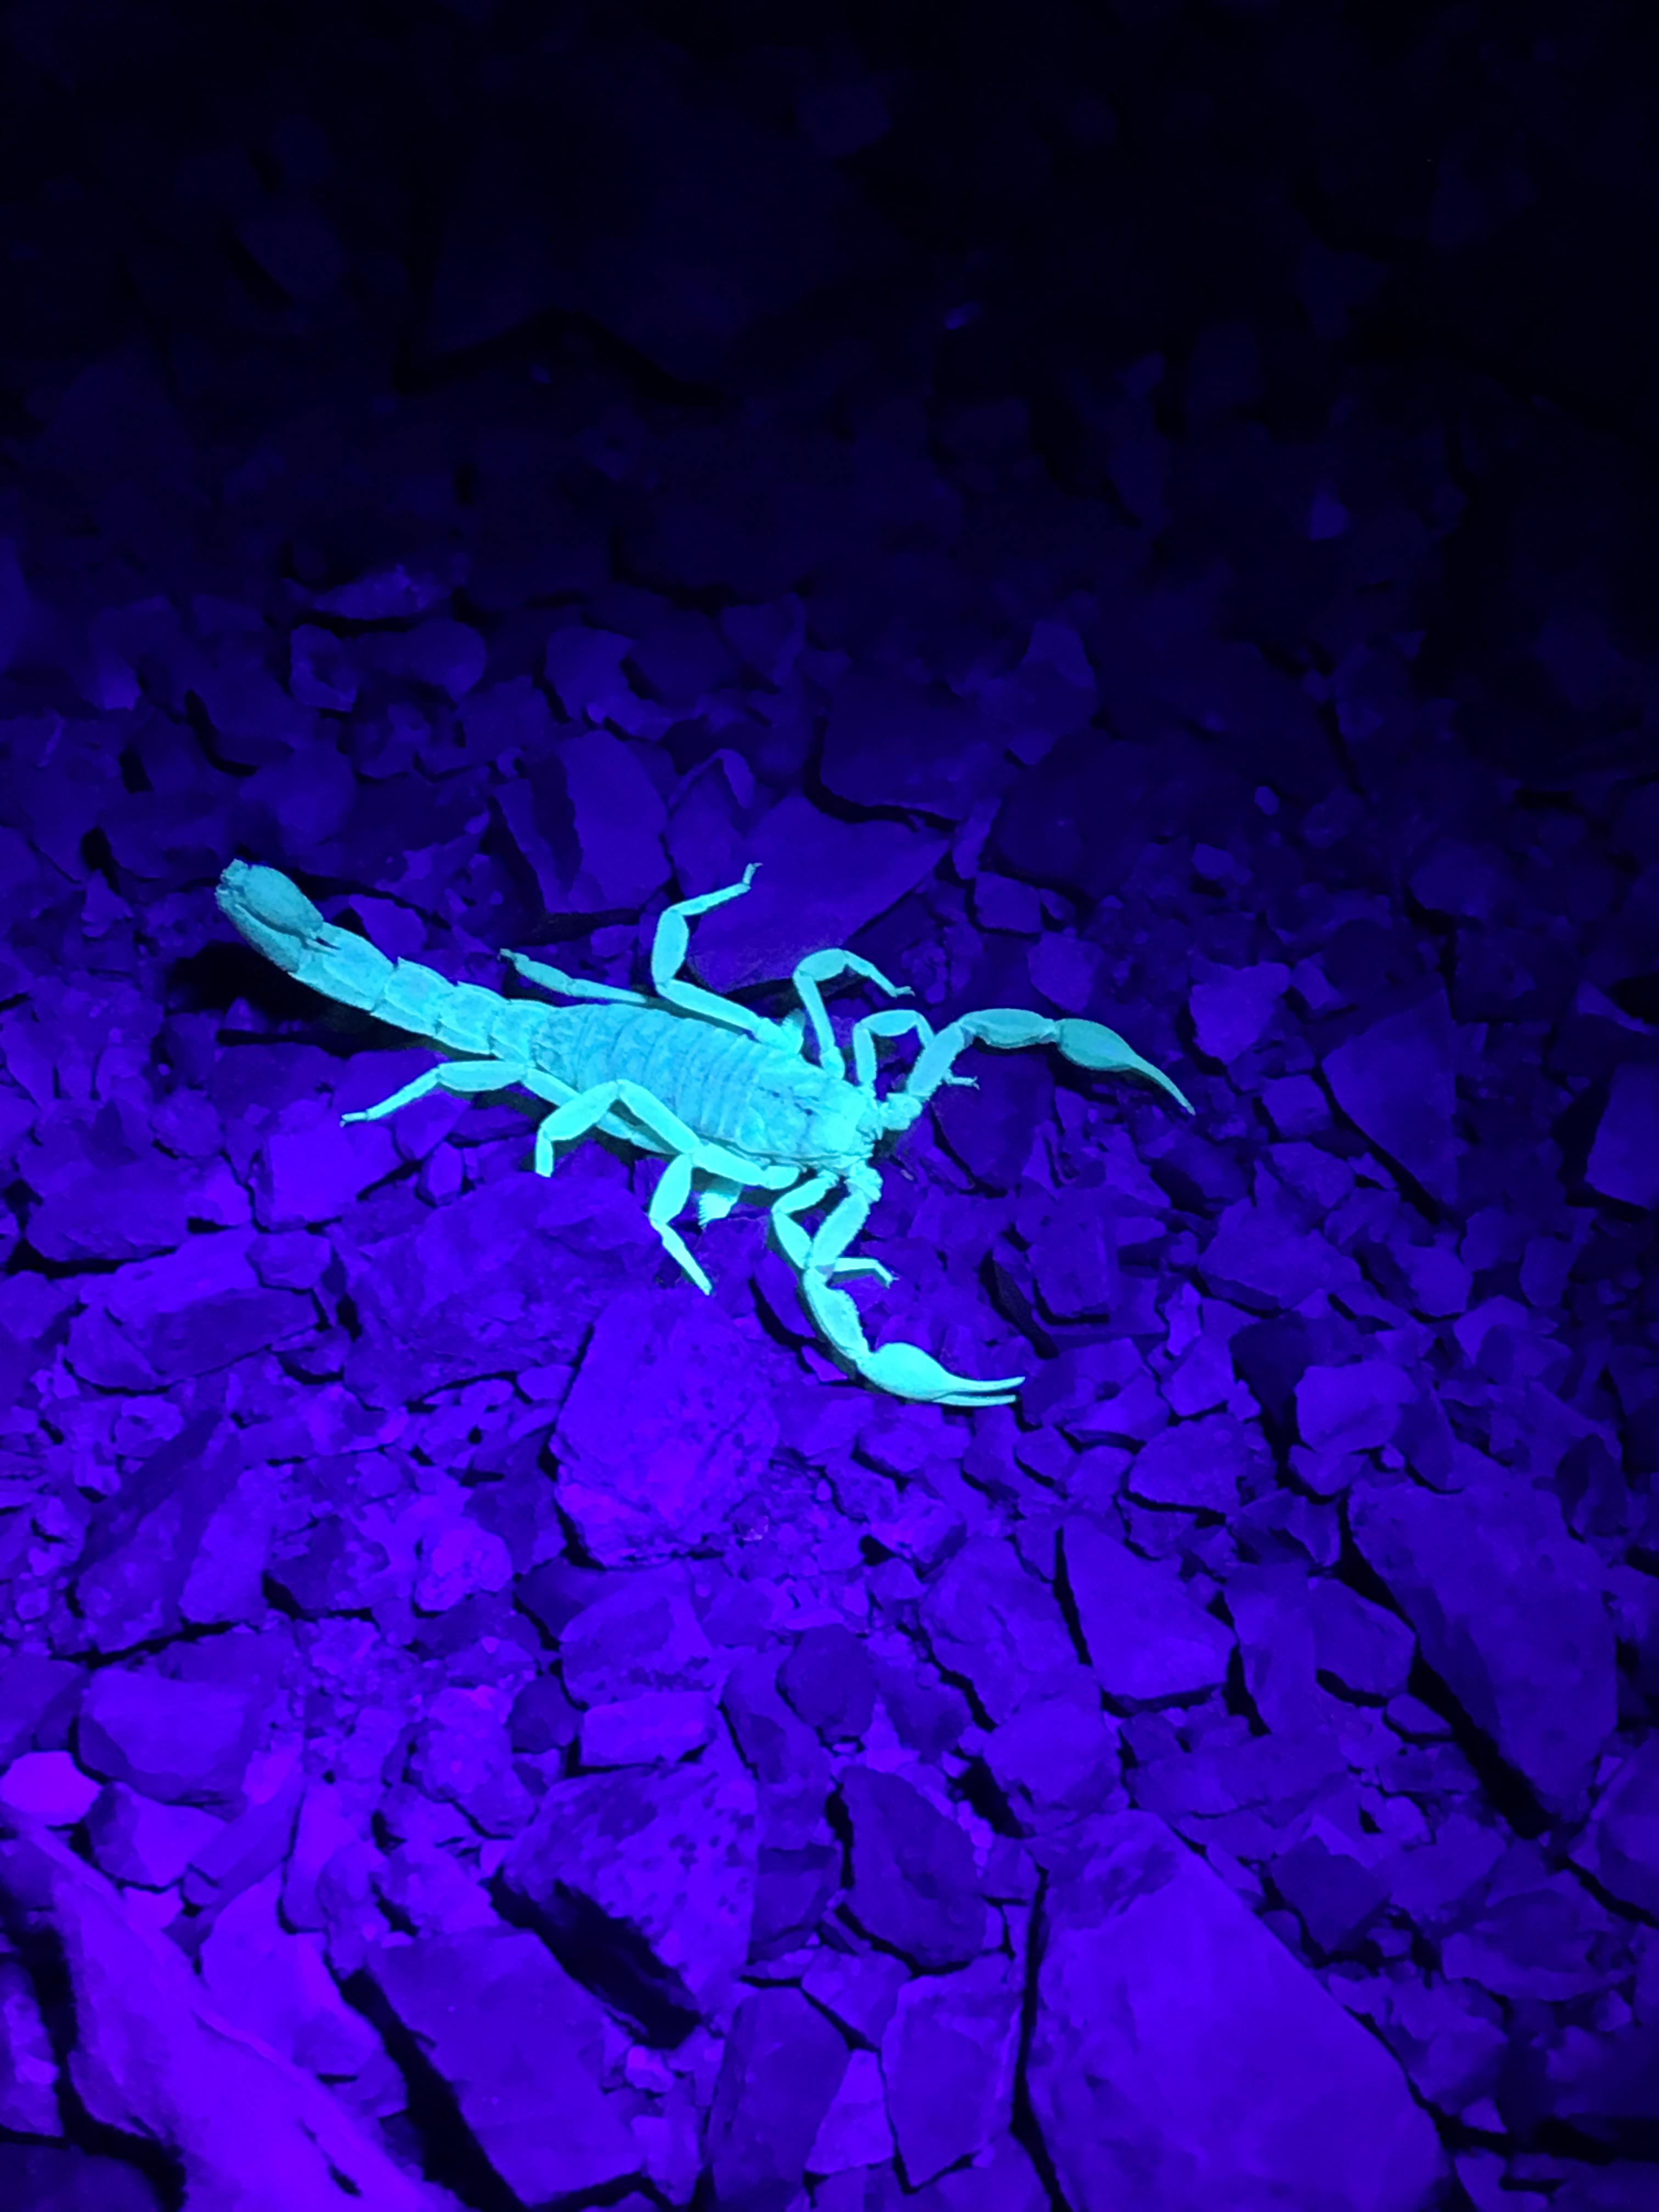 Scorpion glowing under blacklight - Imgur